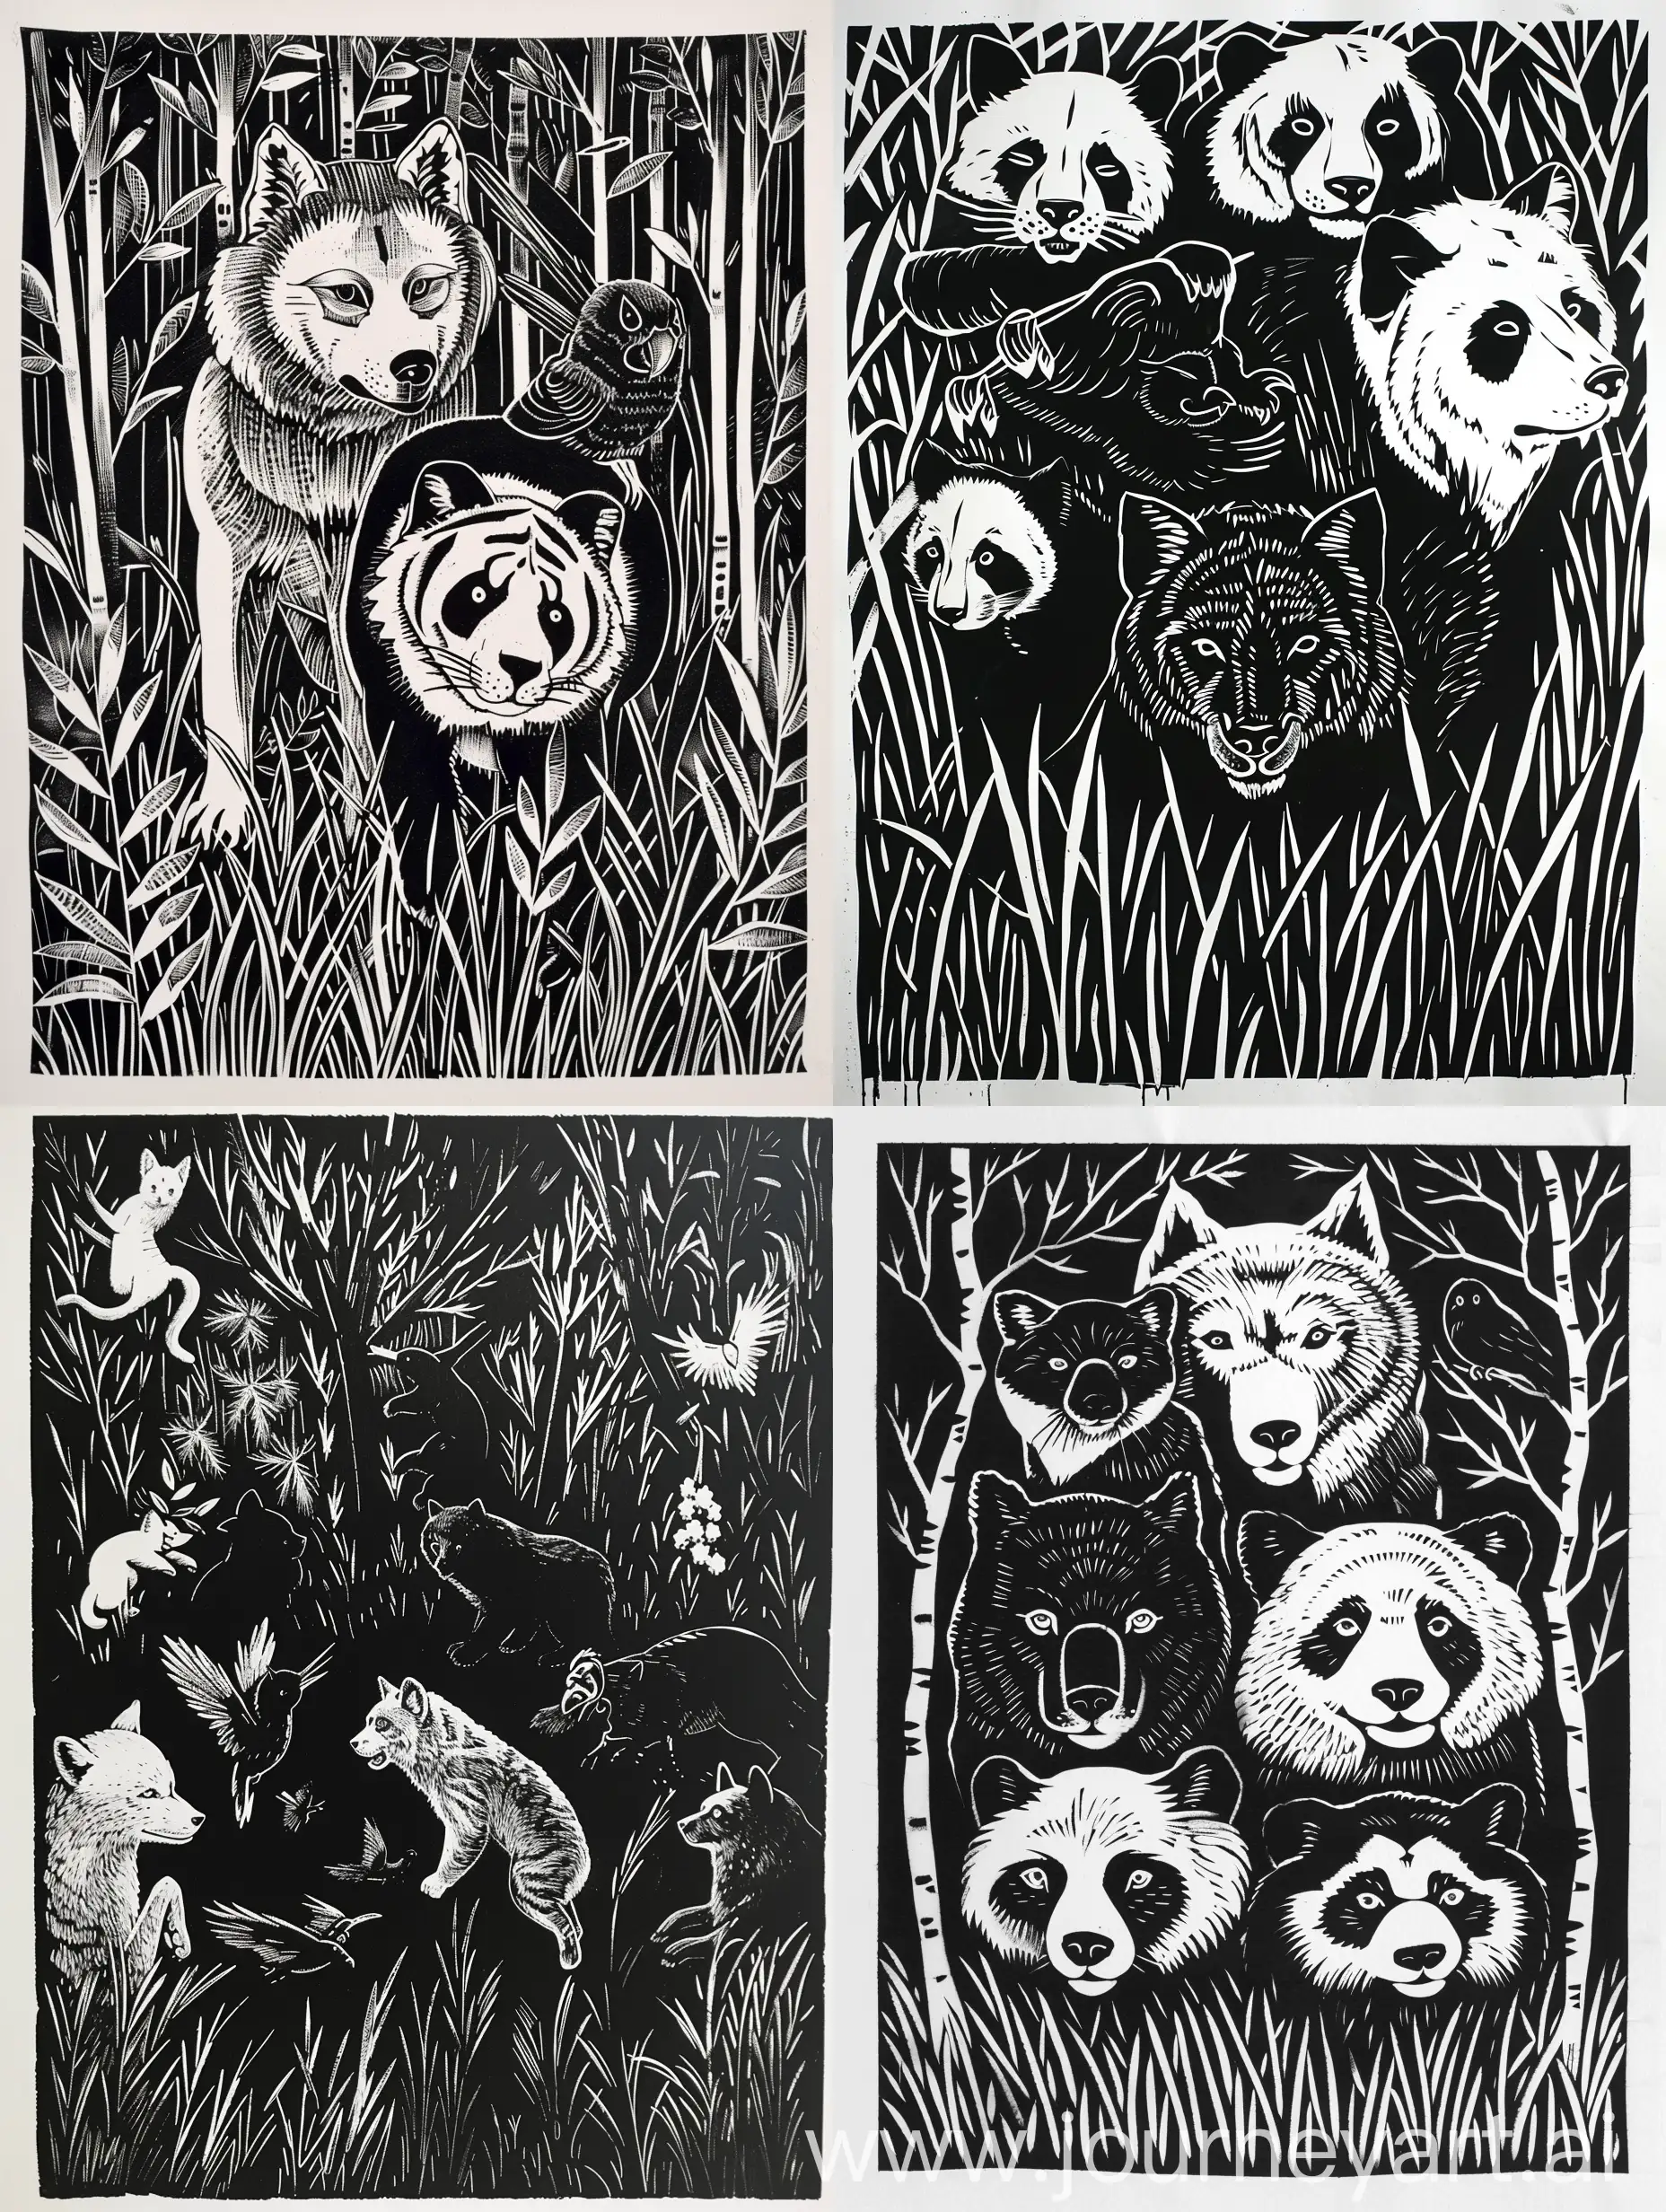 Wildlife-Woodcut-Prints-Wolves-Tigers-Cats-Parrots-and-Pandas